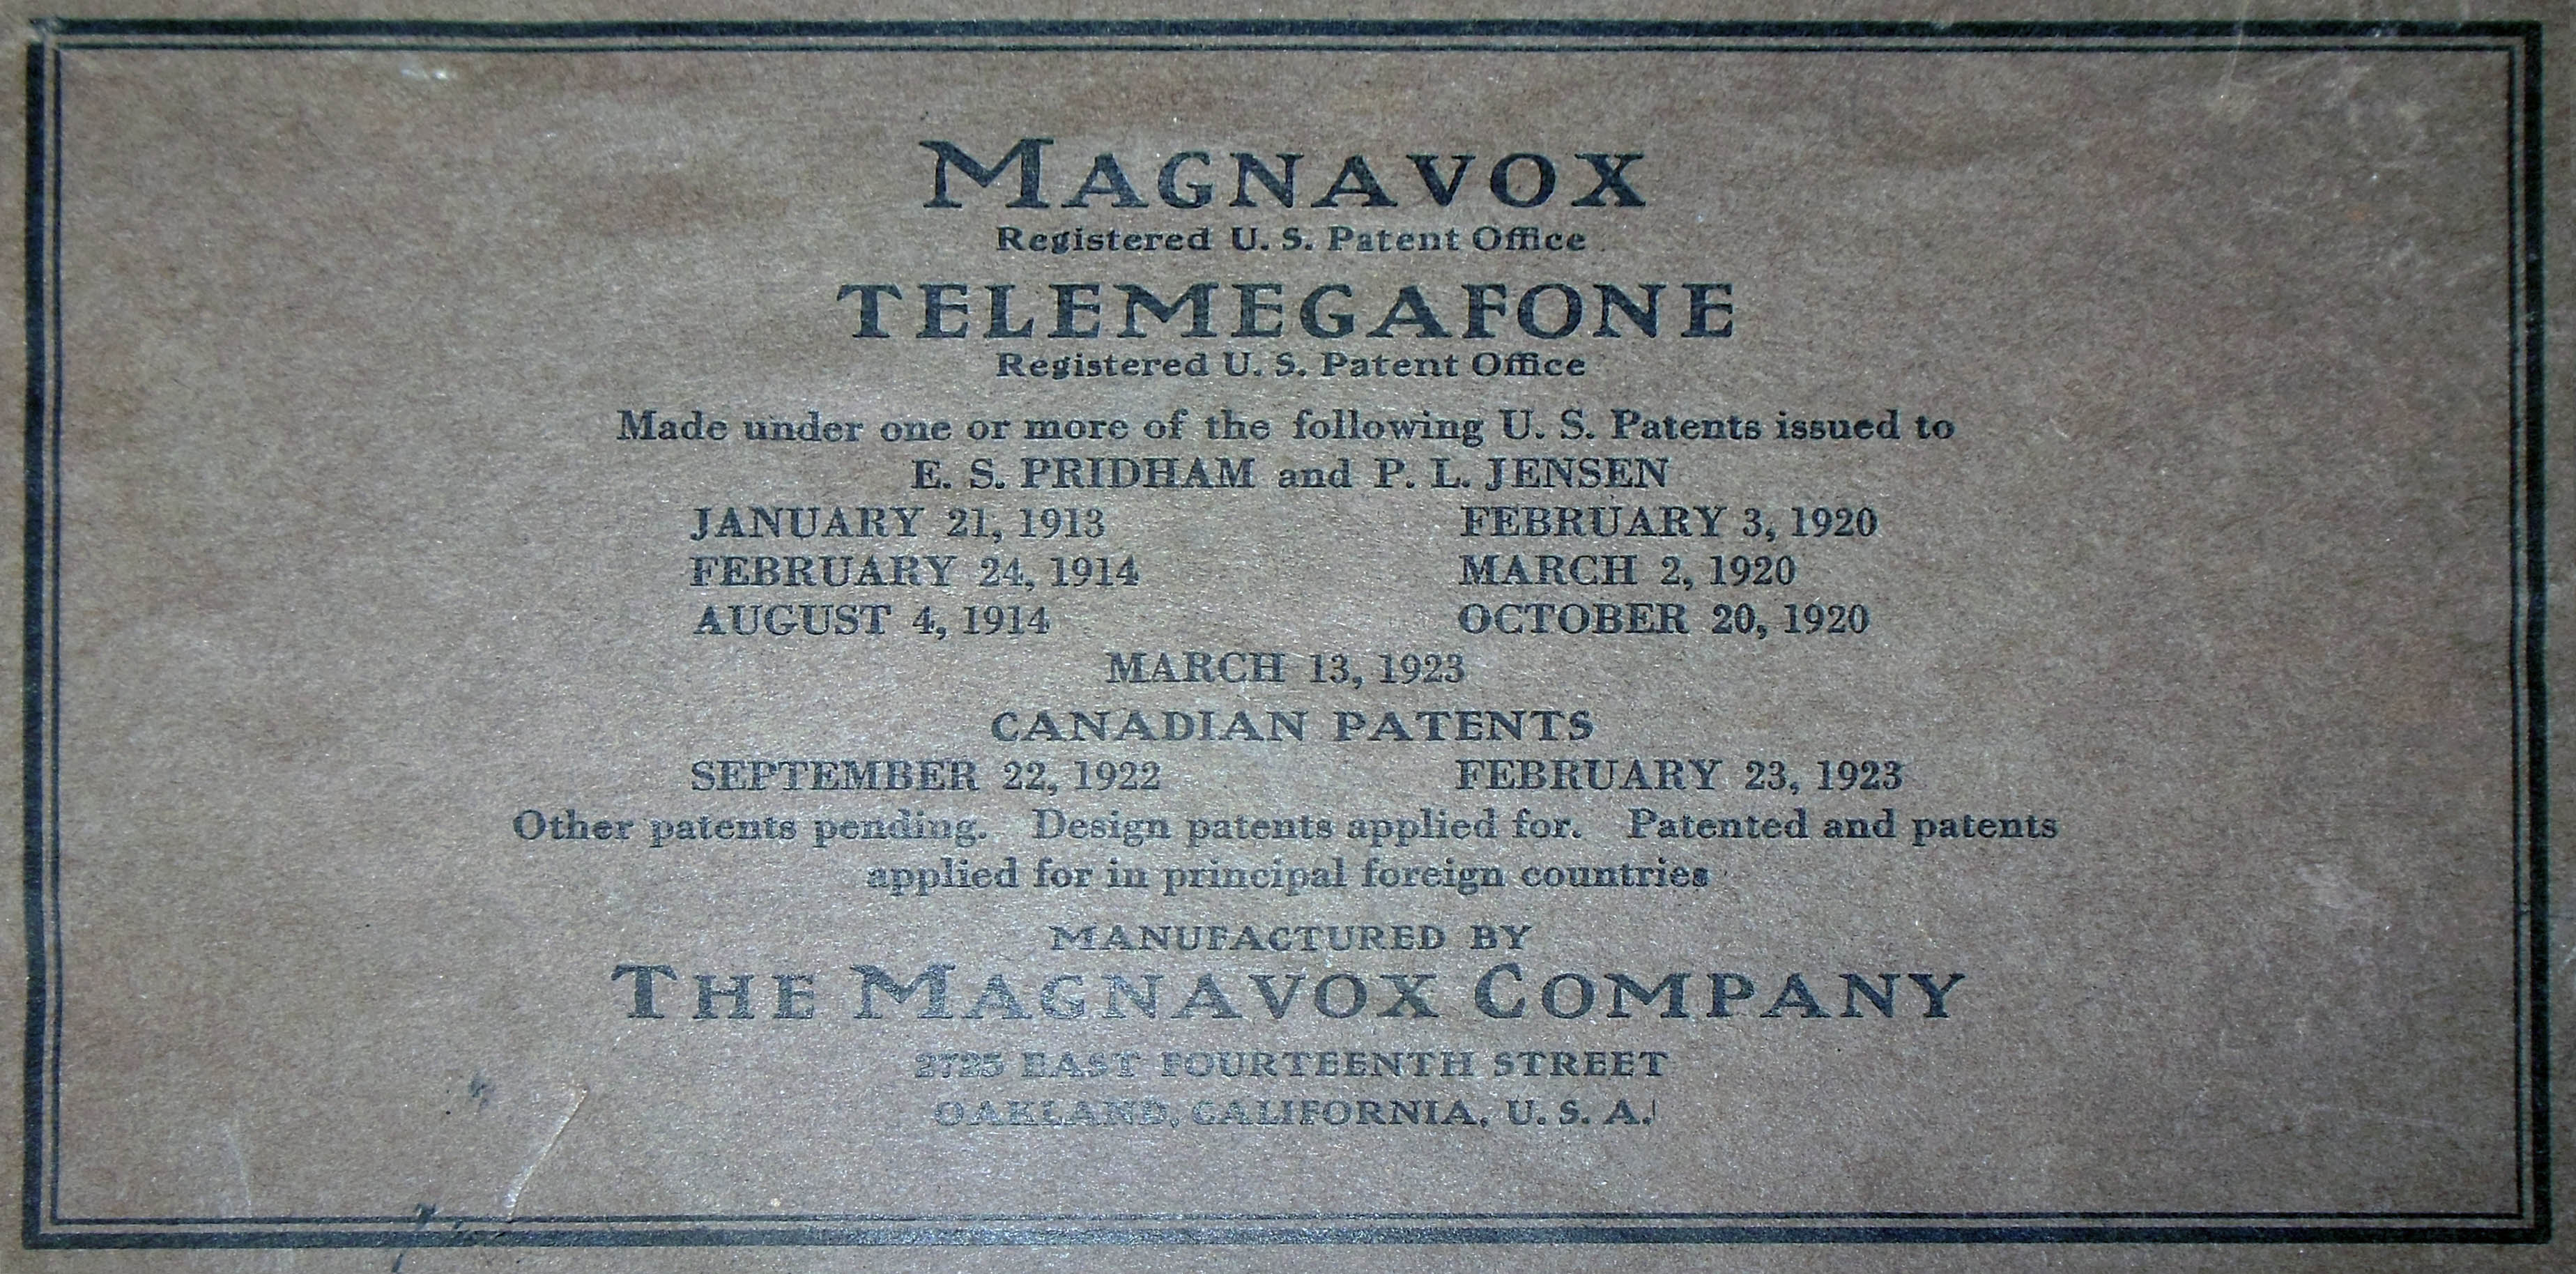 Magnavox R3 patent label from underside of speaker base